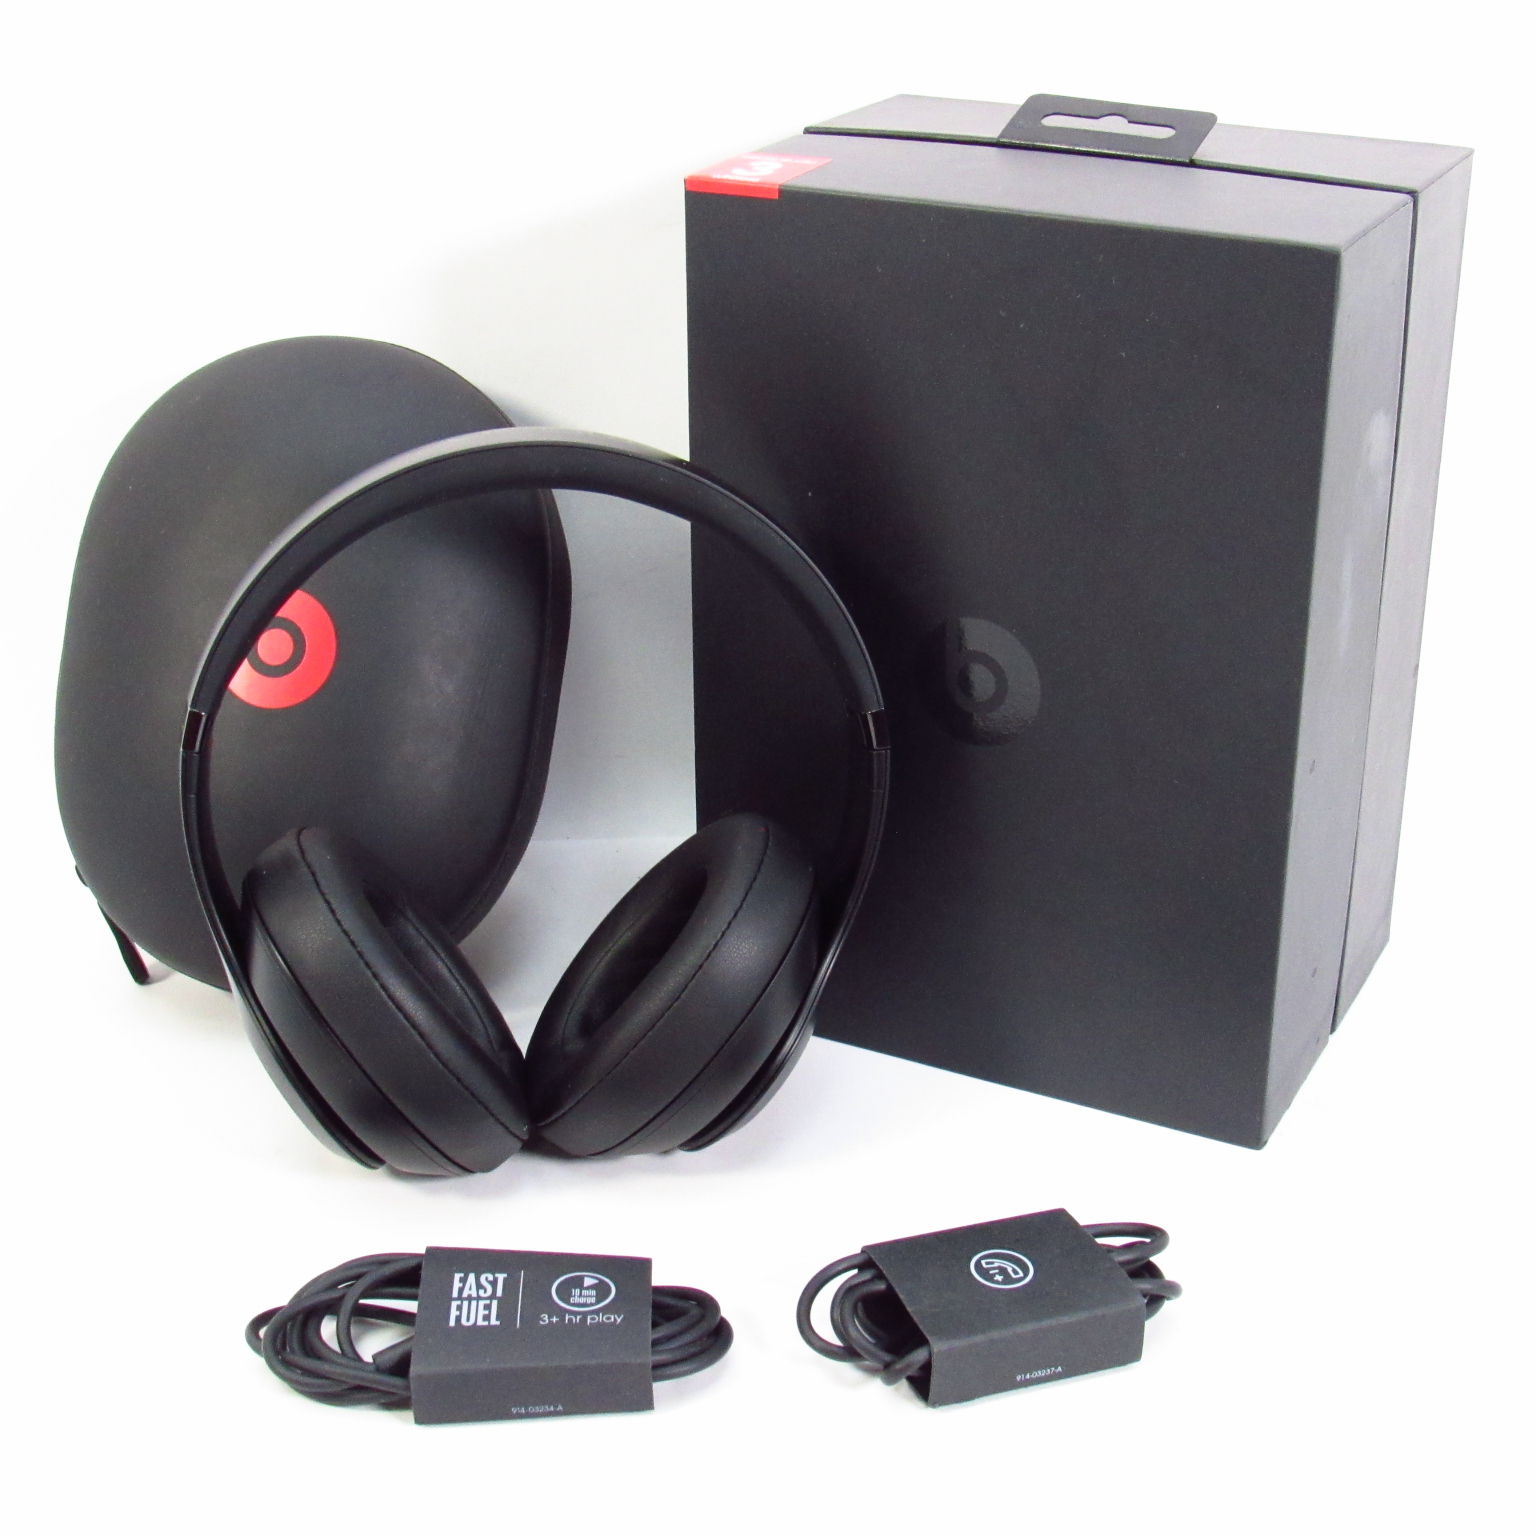 Studio Headphones by Beats Dre Wireless Black Dr. 3 - Bluetooth Over-Ear